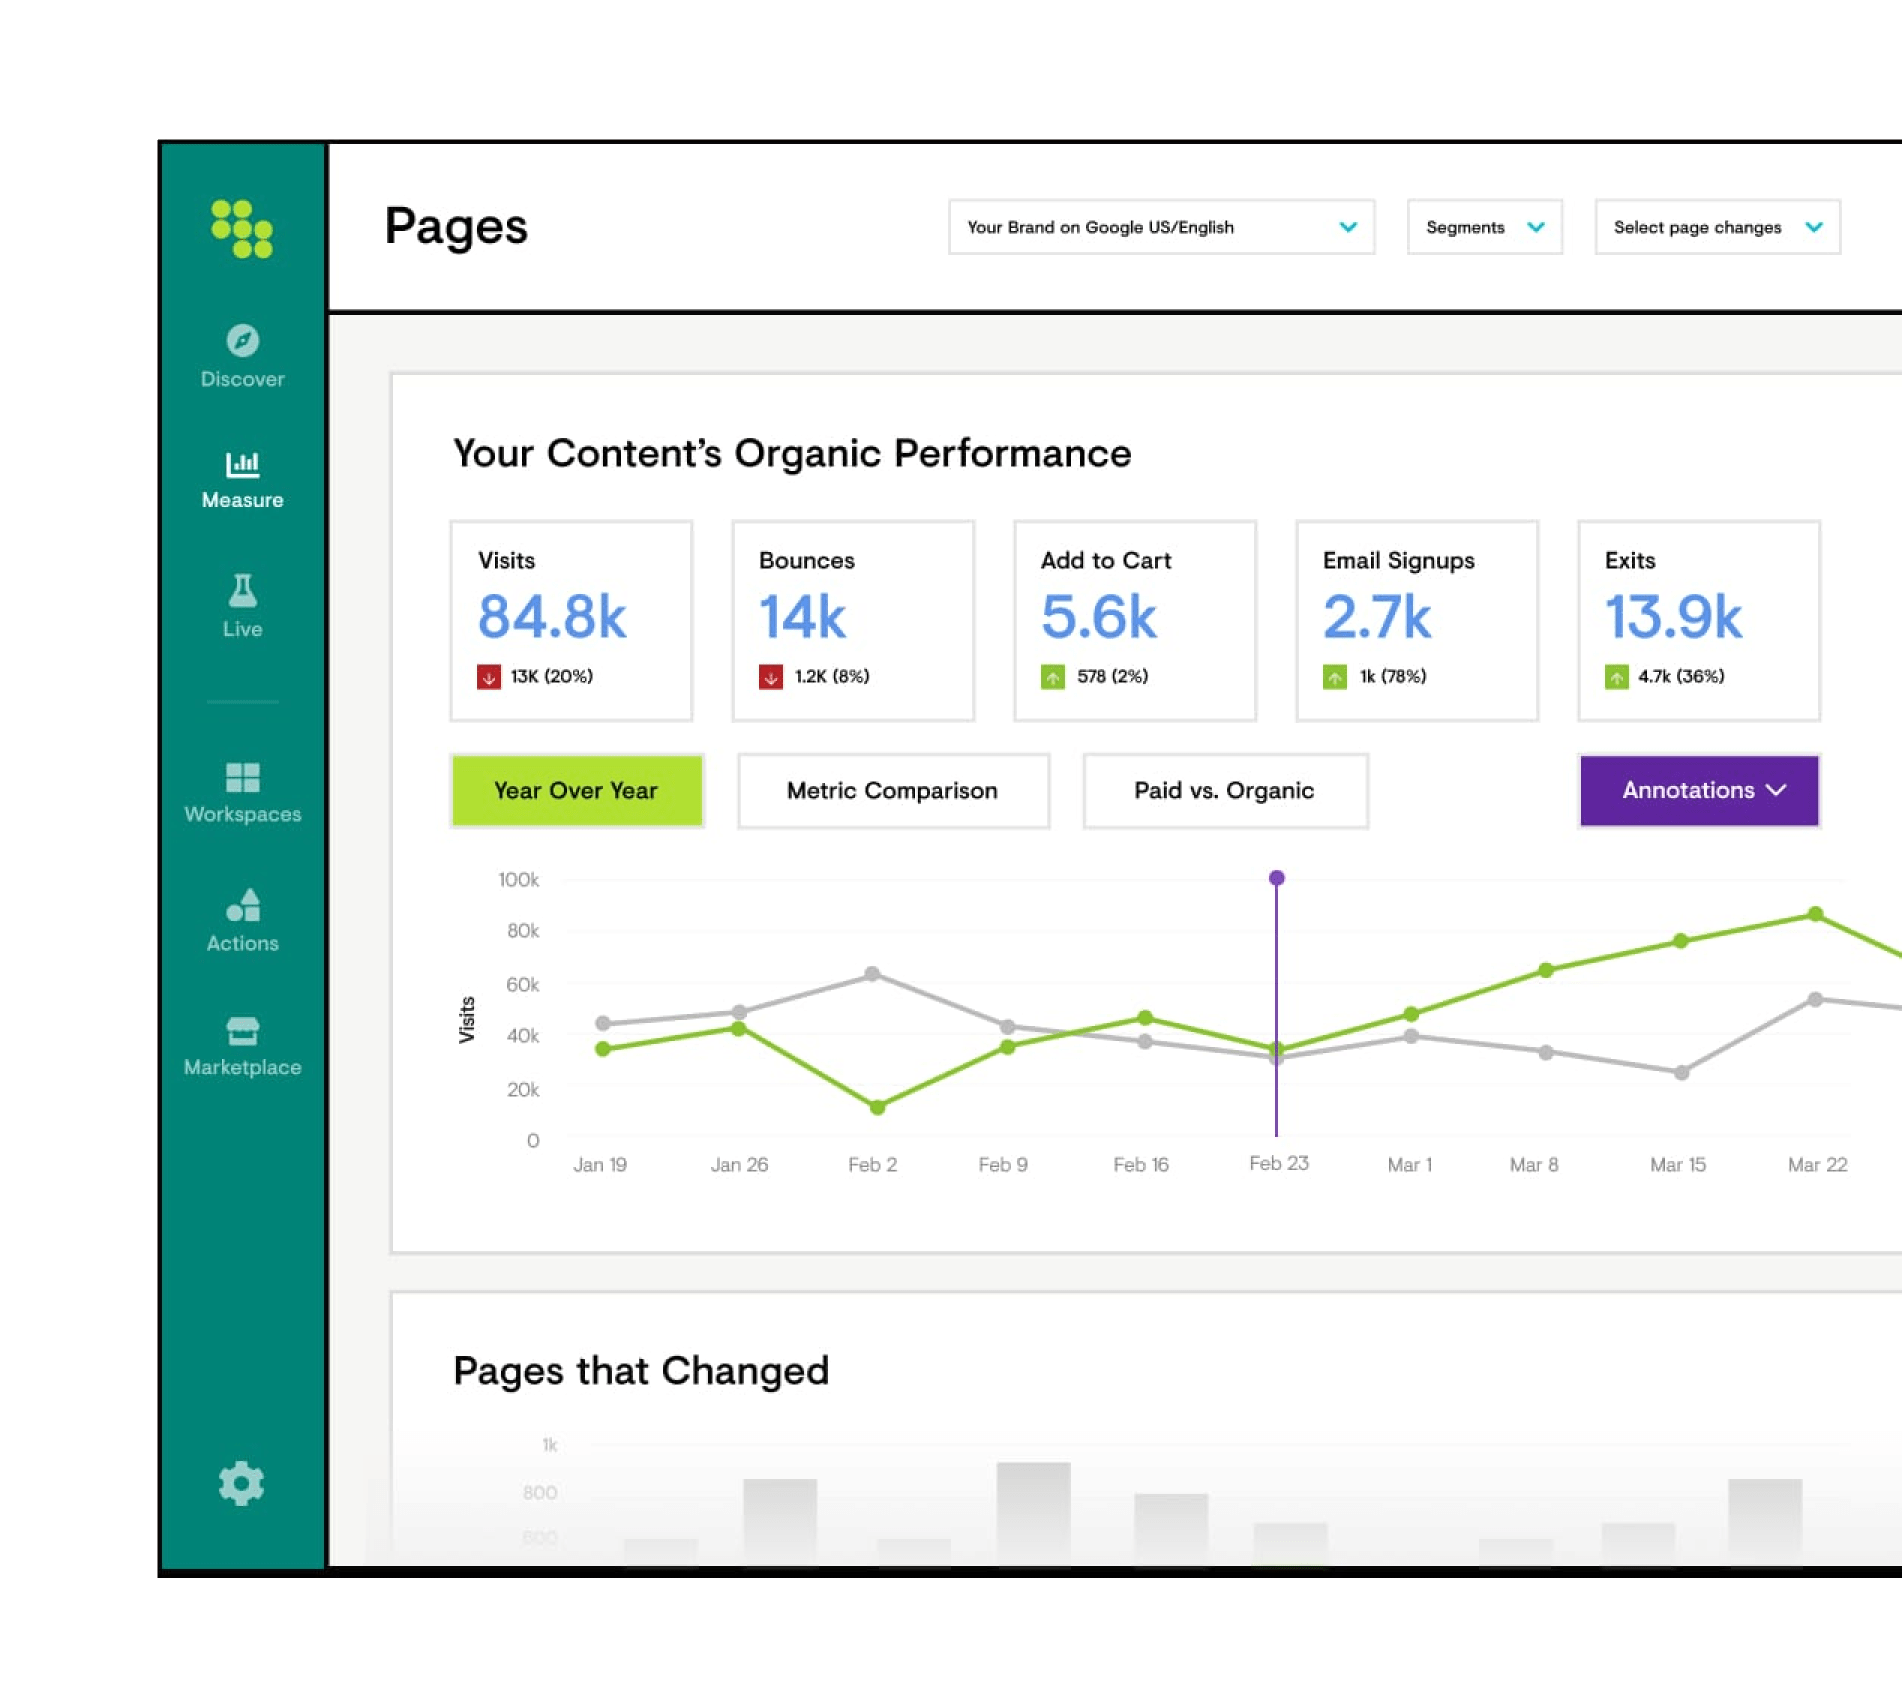 Platform's Display of Content Market Organic Metrics